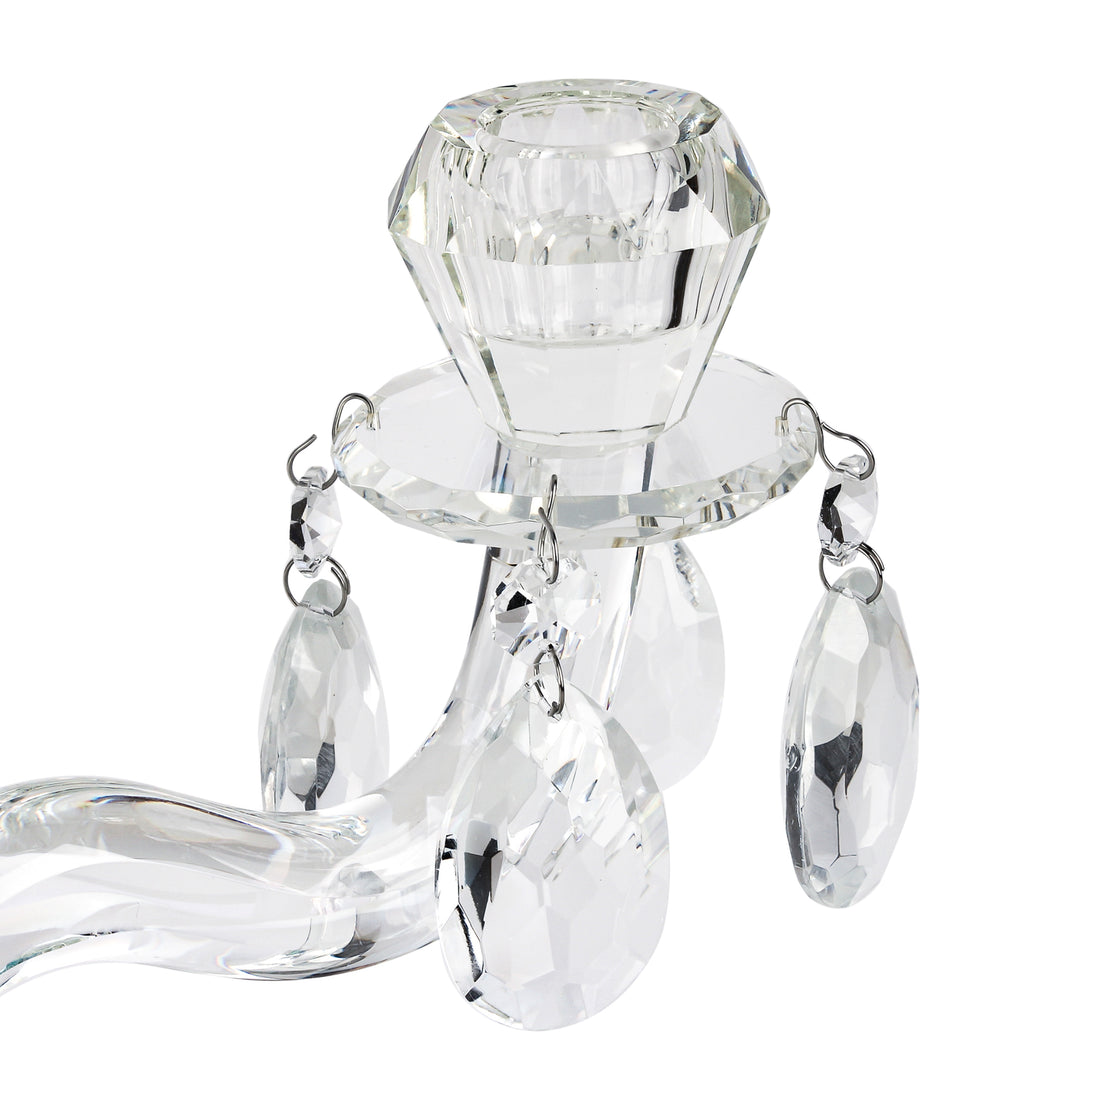 VILLEROY & BOCH Retro Accessories Crystal 3-Light Candelabra - Set of 2